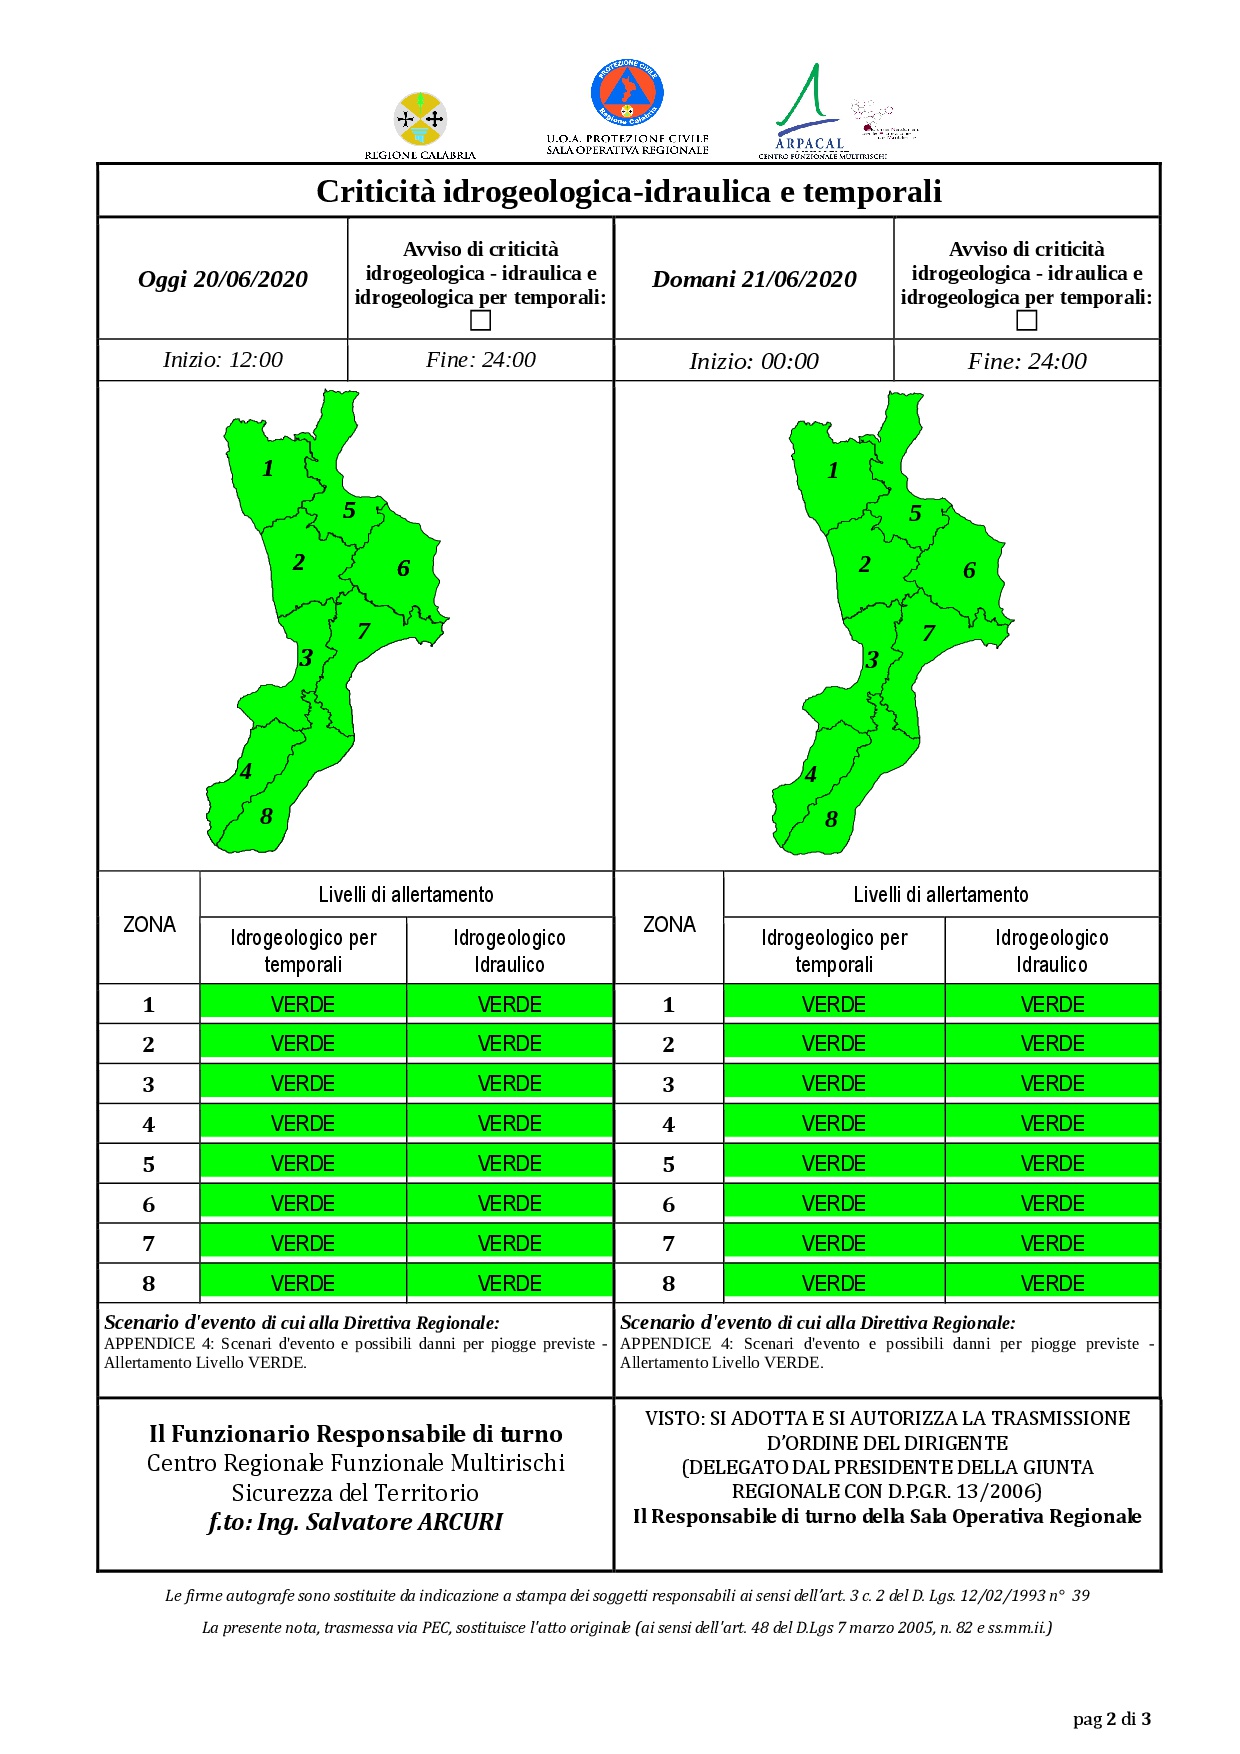 Criticità idrogeologica-idraulica e temporali in Calabria 20-06-2020